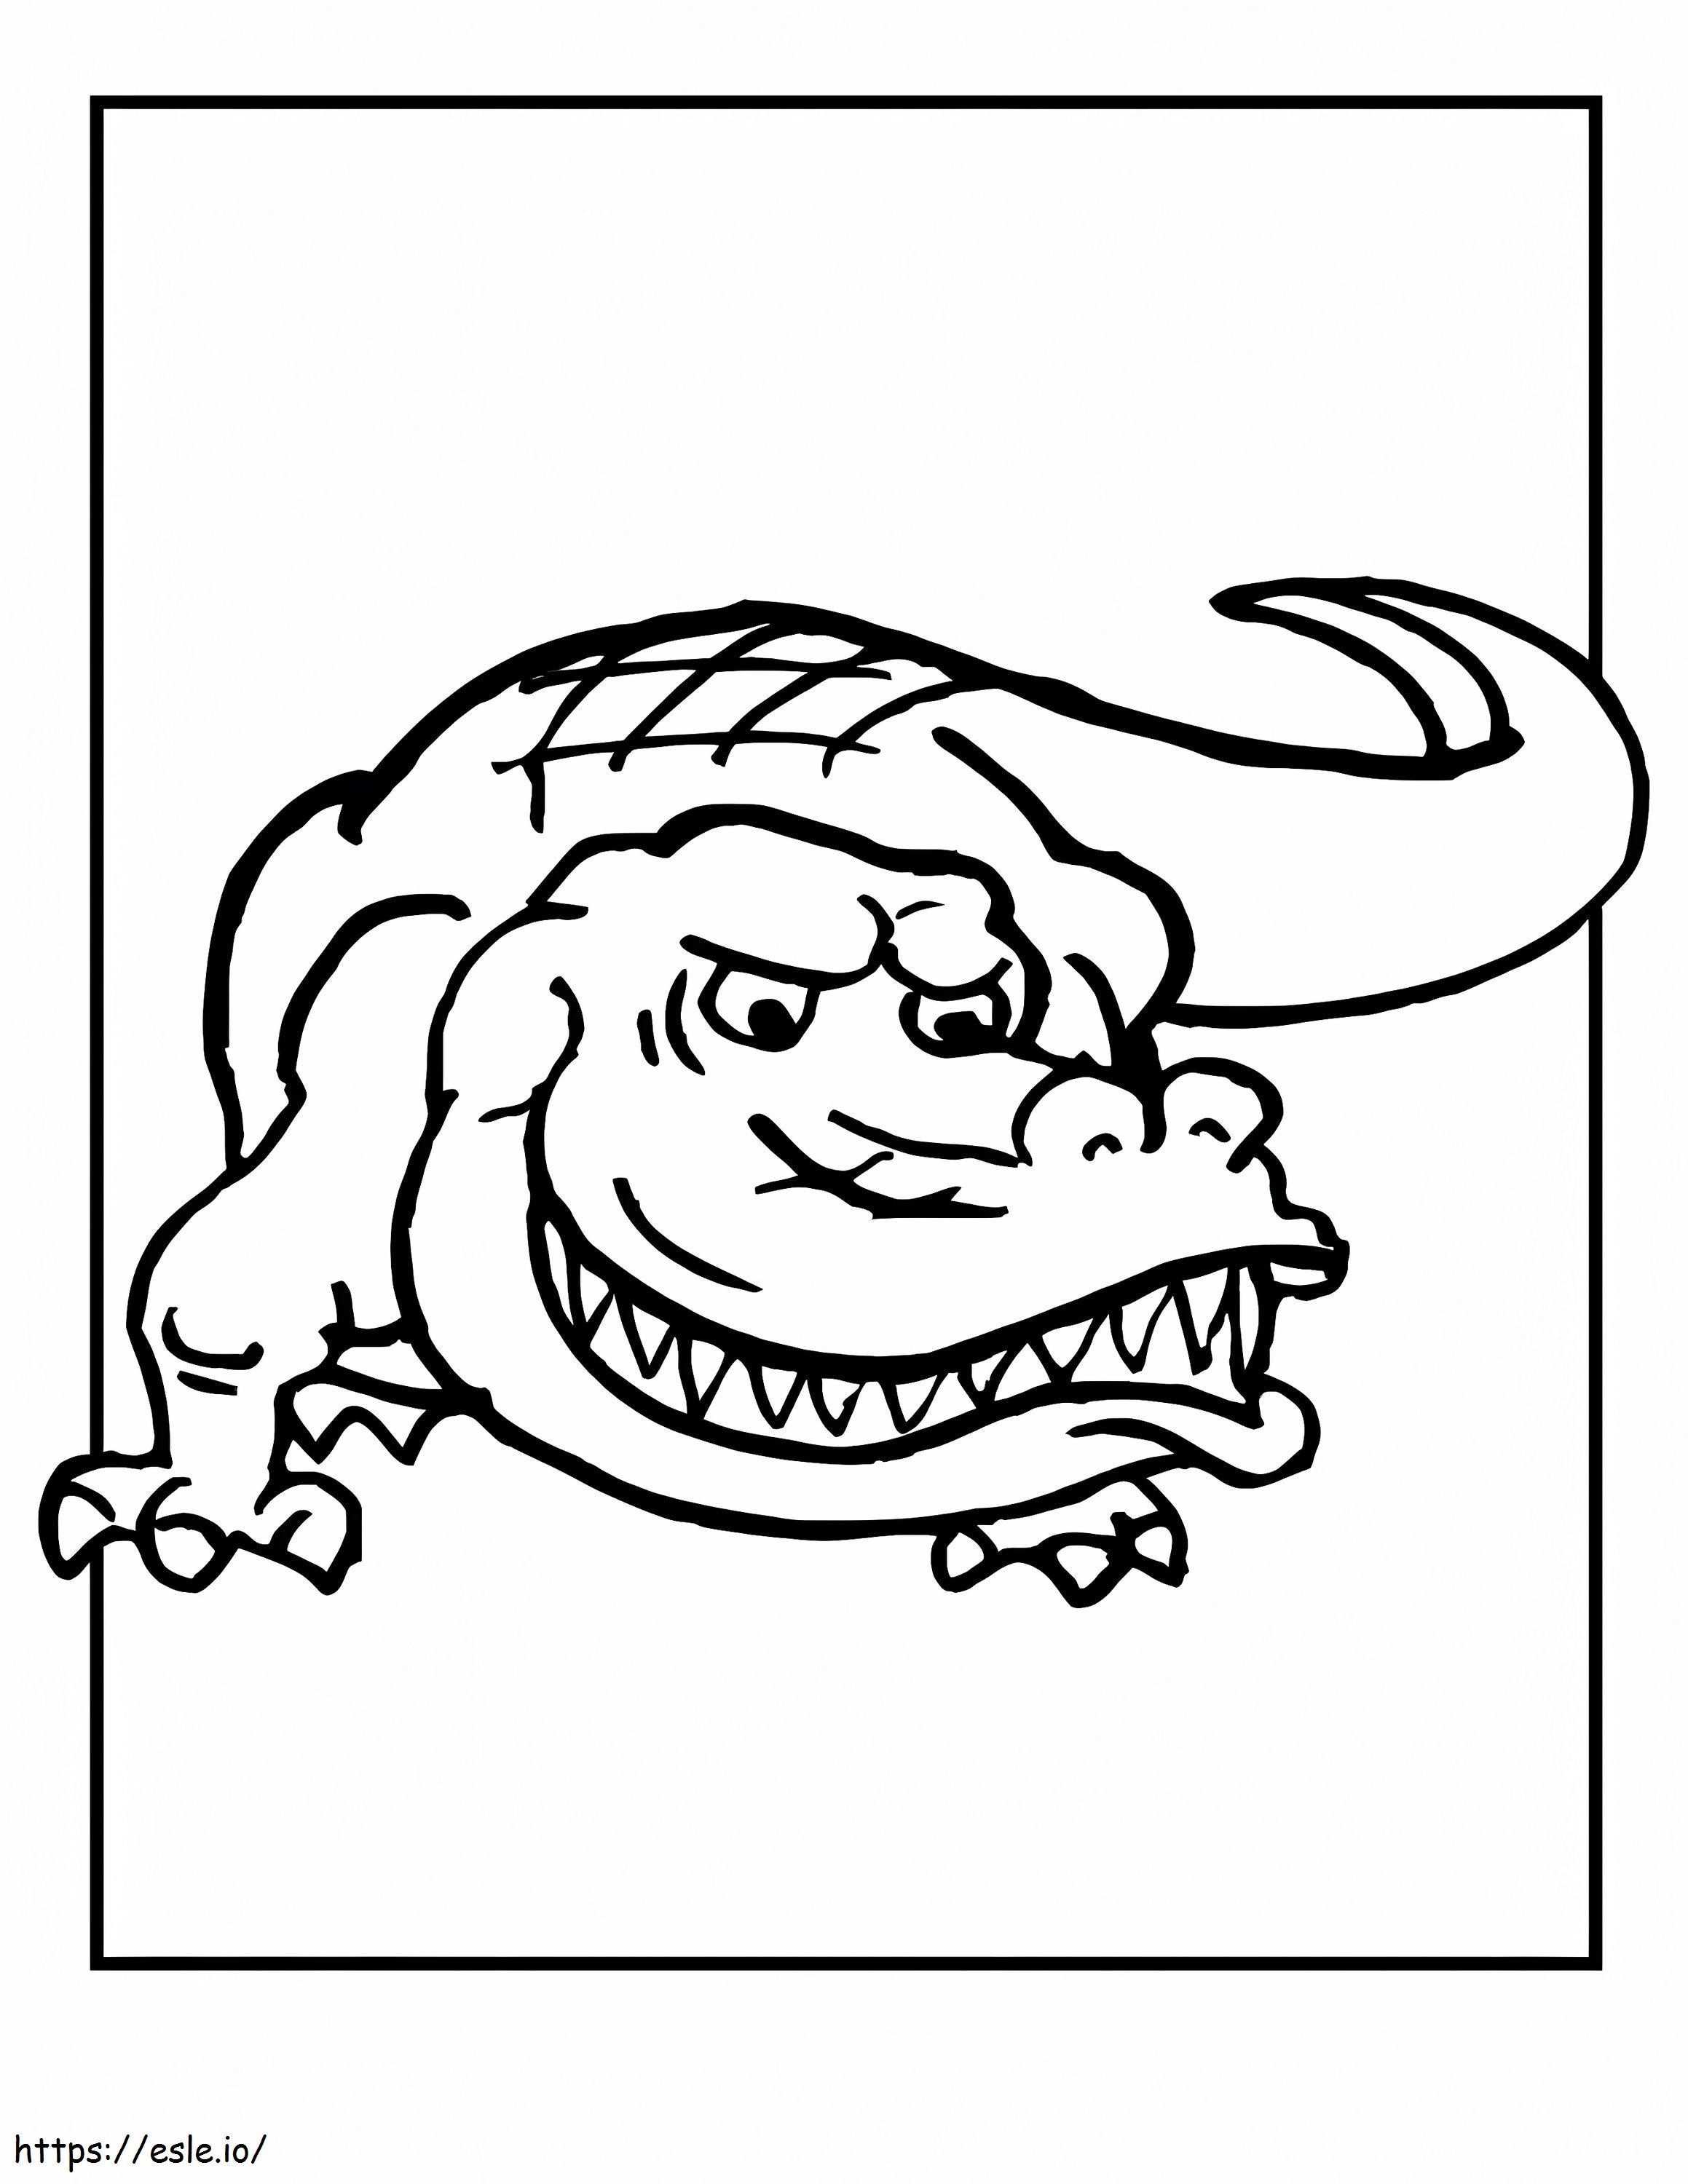 Bad Alligator coloring page